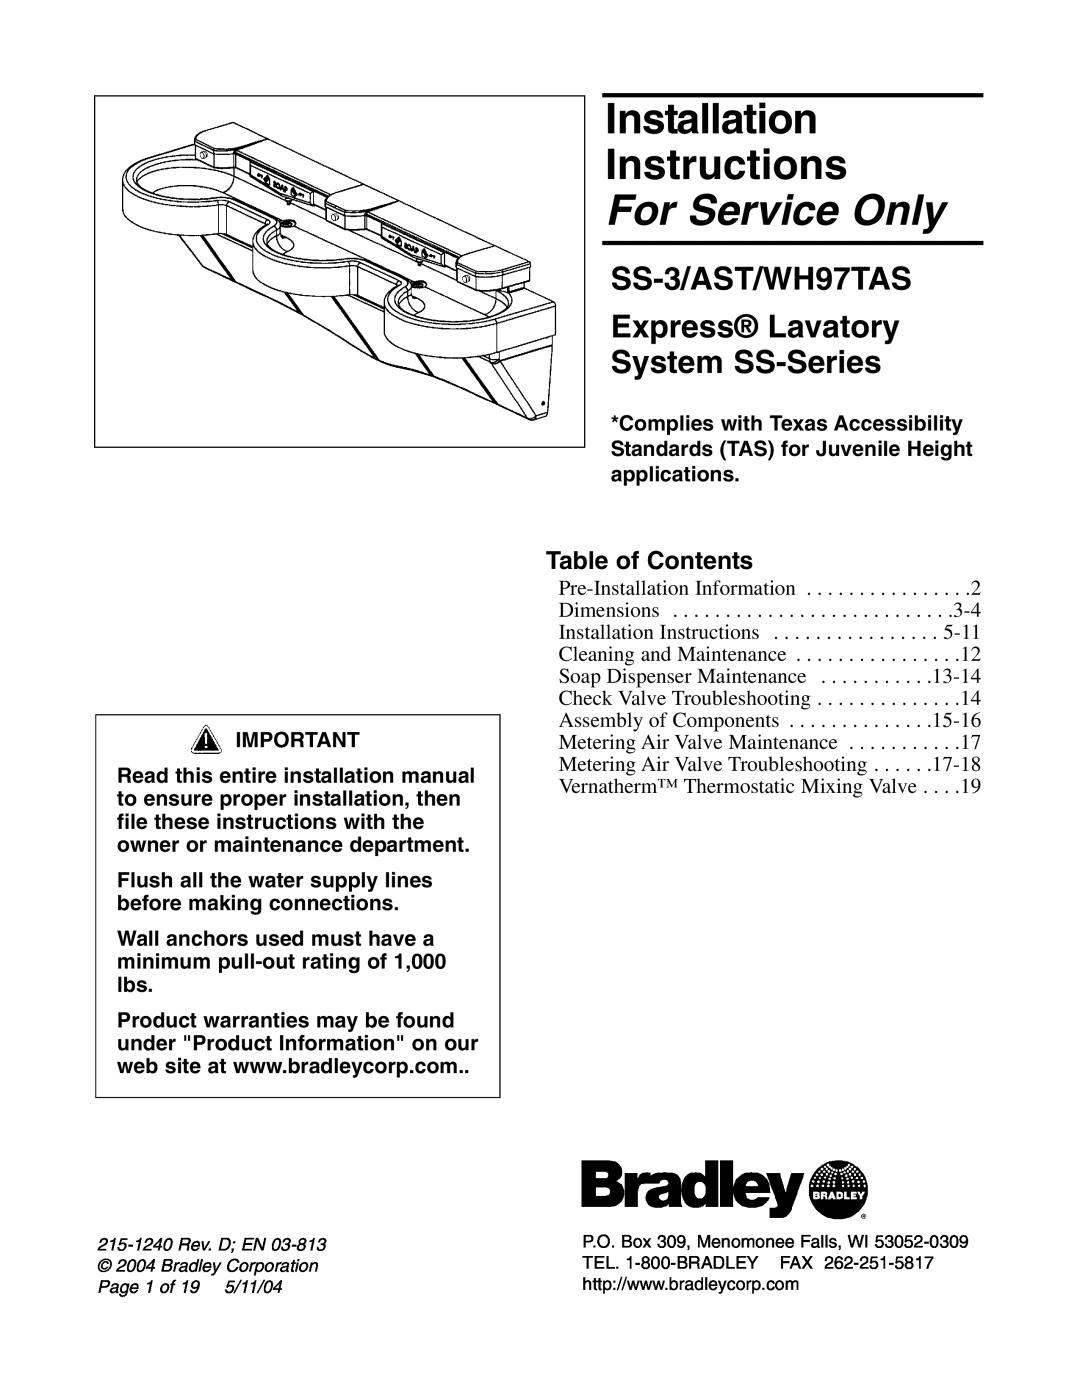 Bradley Smoker SS-3 installation instructions Table of Contents, Installation Instructions, For Service Only 